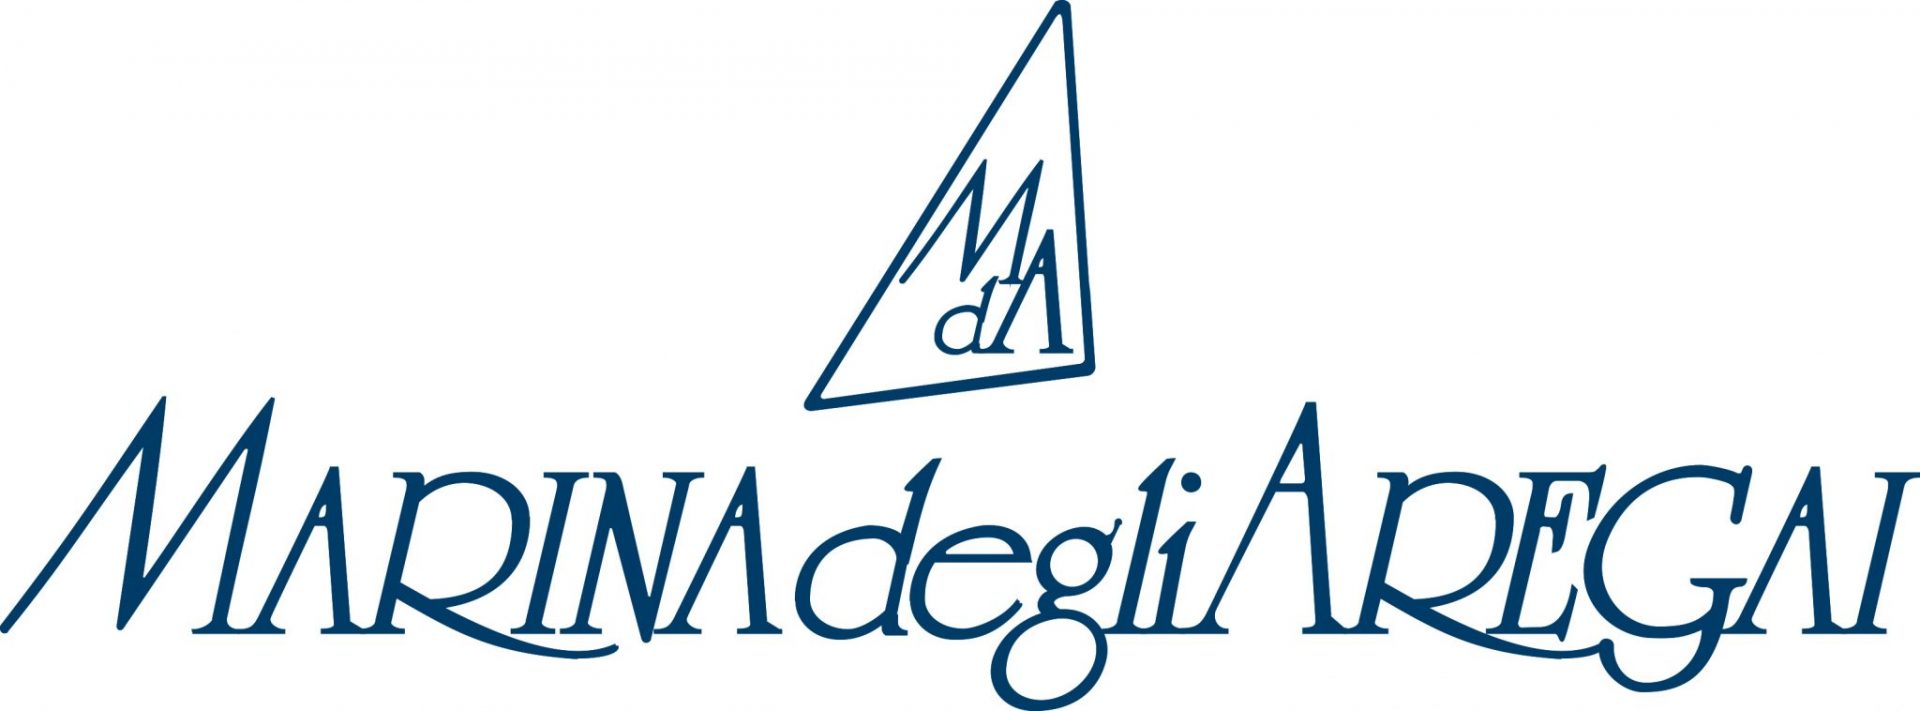 Logo Marina degli Aregai